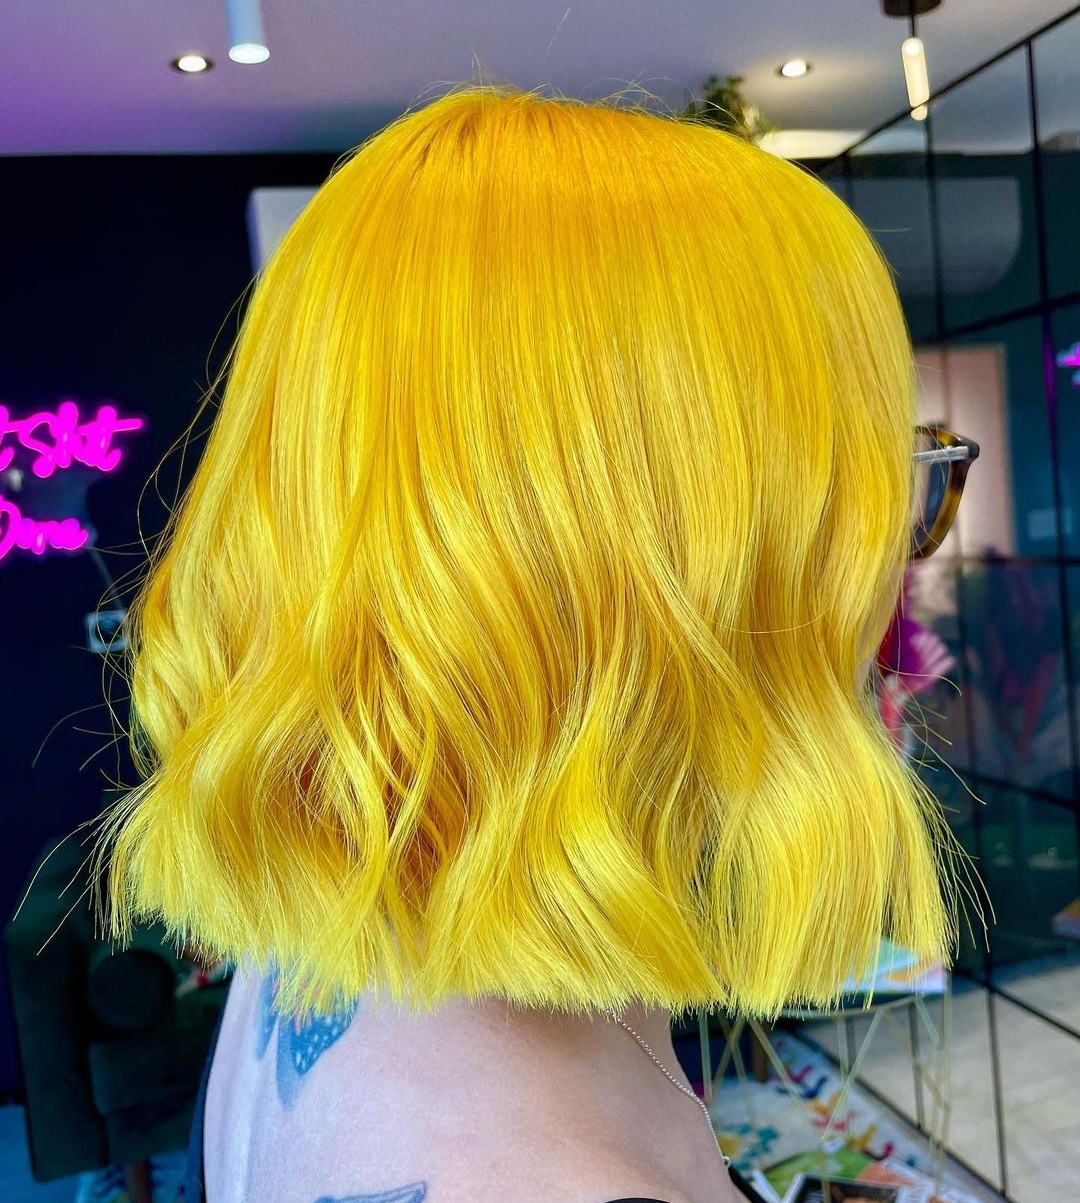 Neon Yellow Hair Color on Bob Cut